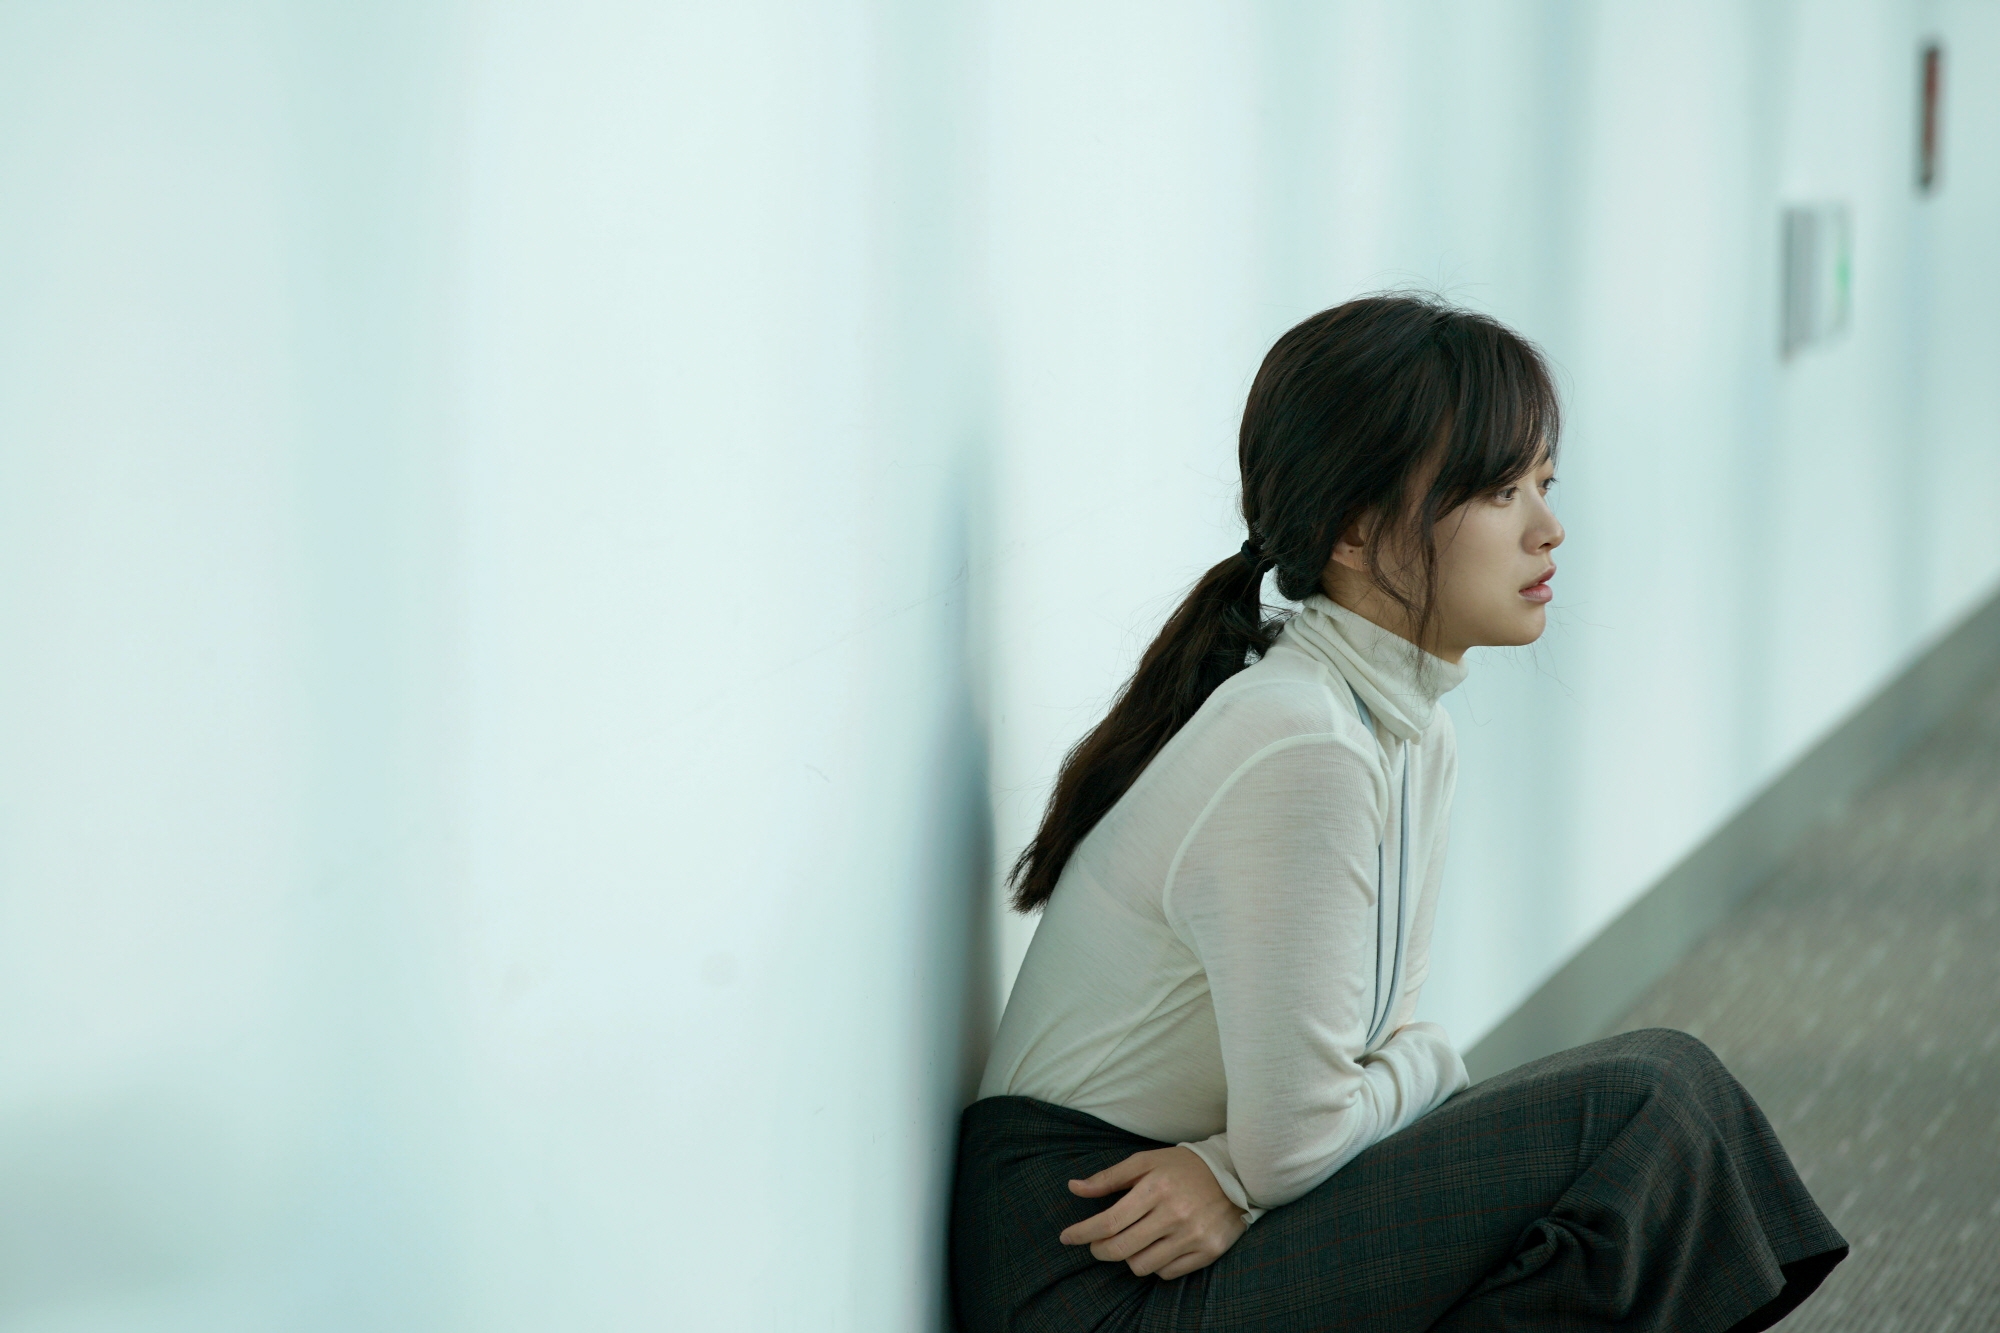 Kdramalive image of Chun Woo-hee in "Vertigo" (2019)